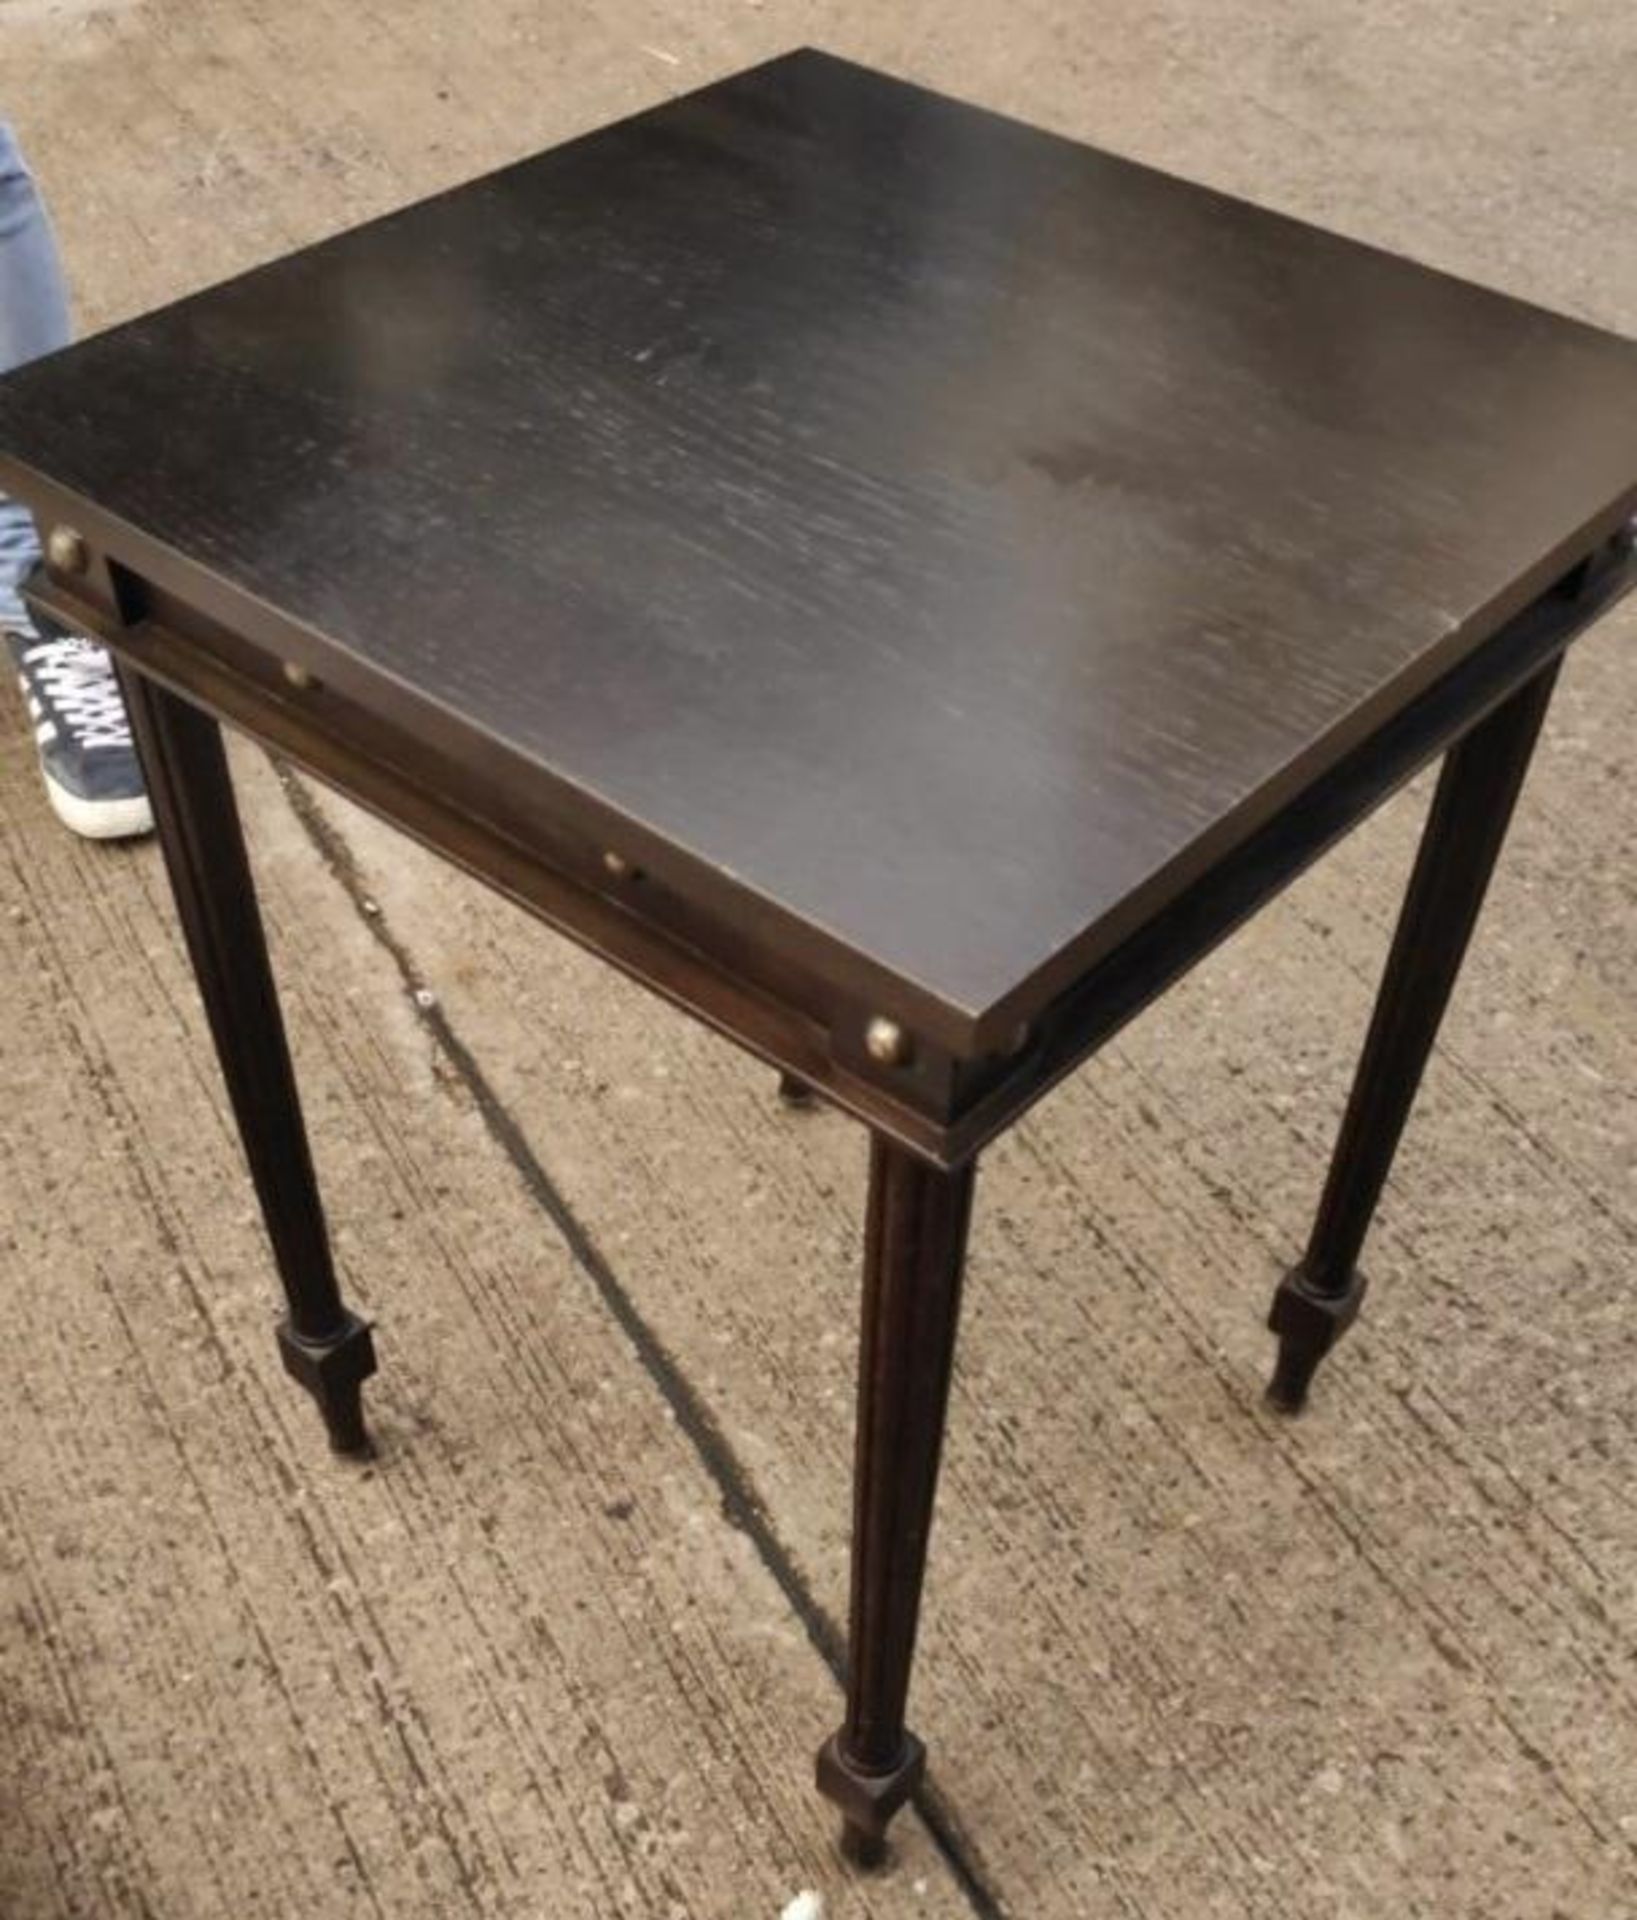 1 x JUSTIN VAN BREDA 'Thomas' Tall Side Table With A Dark Oak Finish - Dimensions: W50 x D50 x H65cm - Image 3 of 5